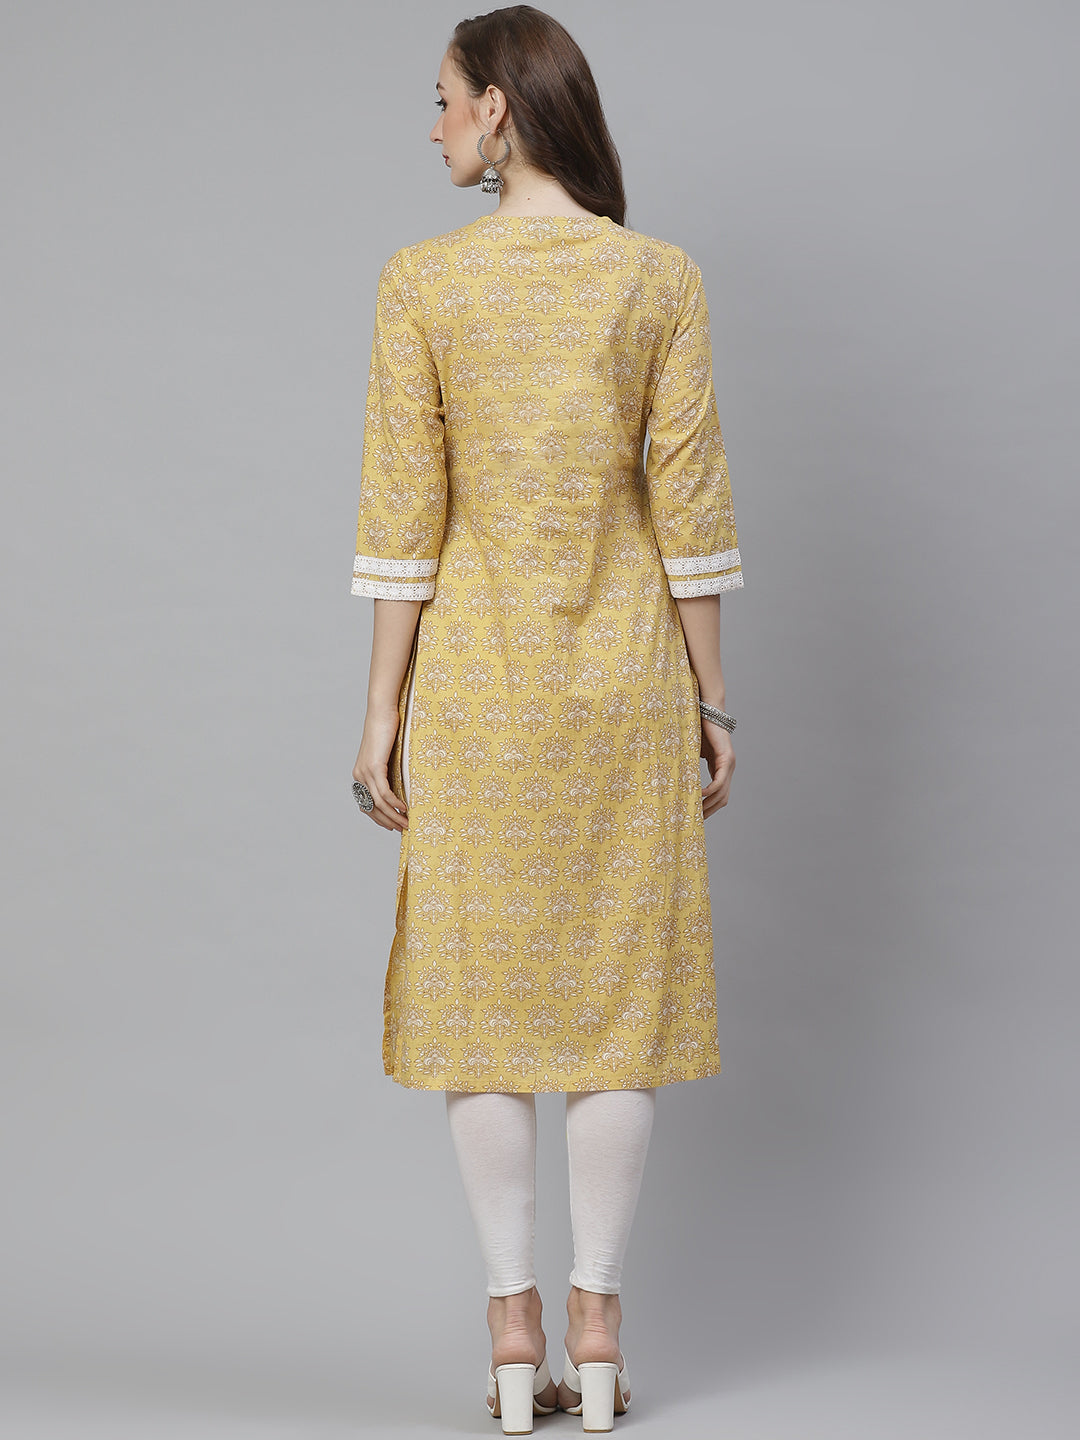 Women's Yellow & Beige Ethnic Print A-Line Kurta - Bhama Couture